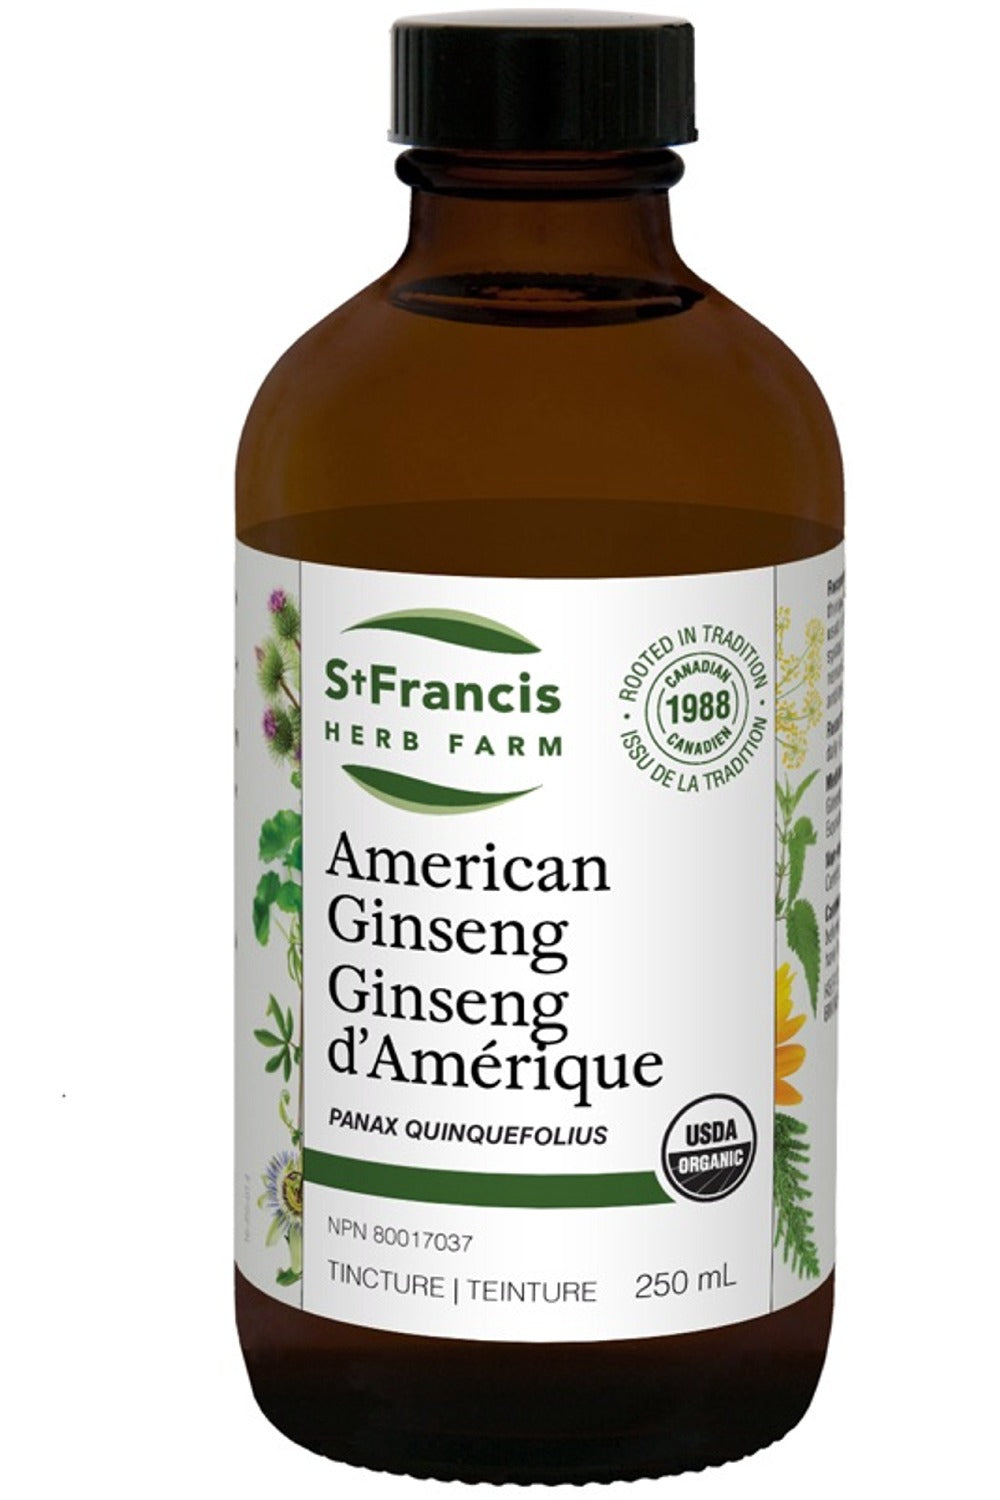 ST FRANCIS HERB FARM American Ginseng (250 ml)